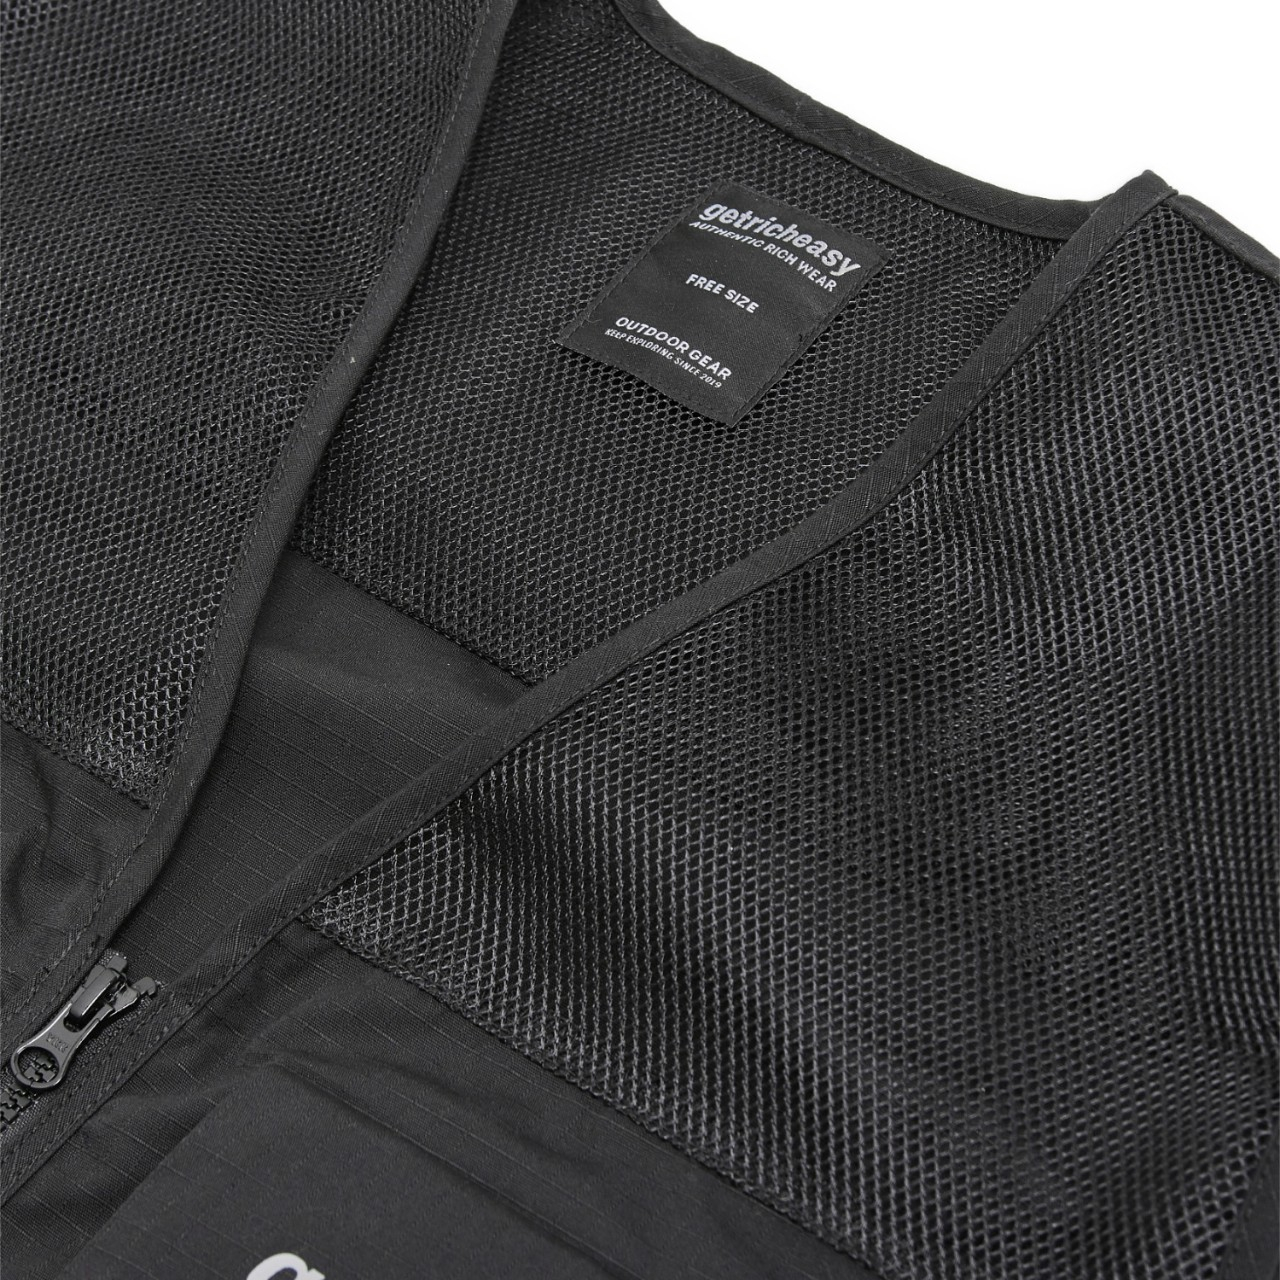 getricheasy™ Ripstop Vest (Black)